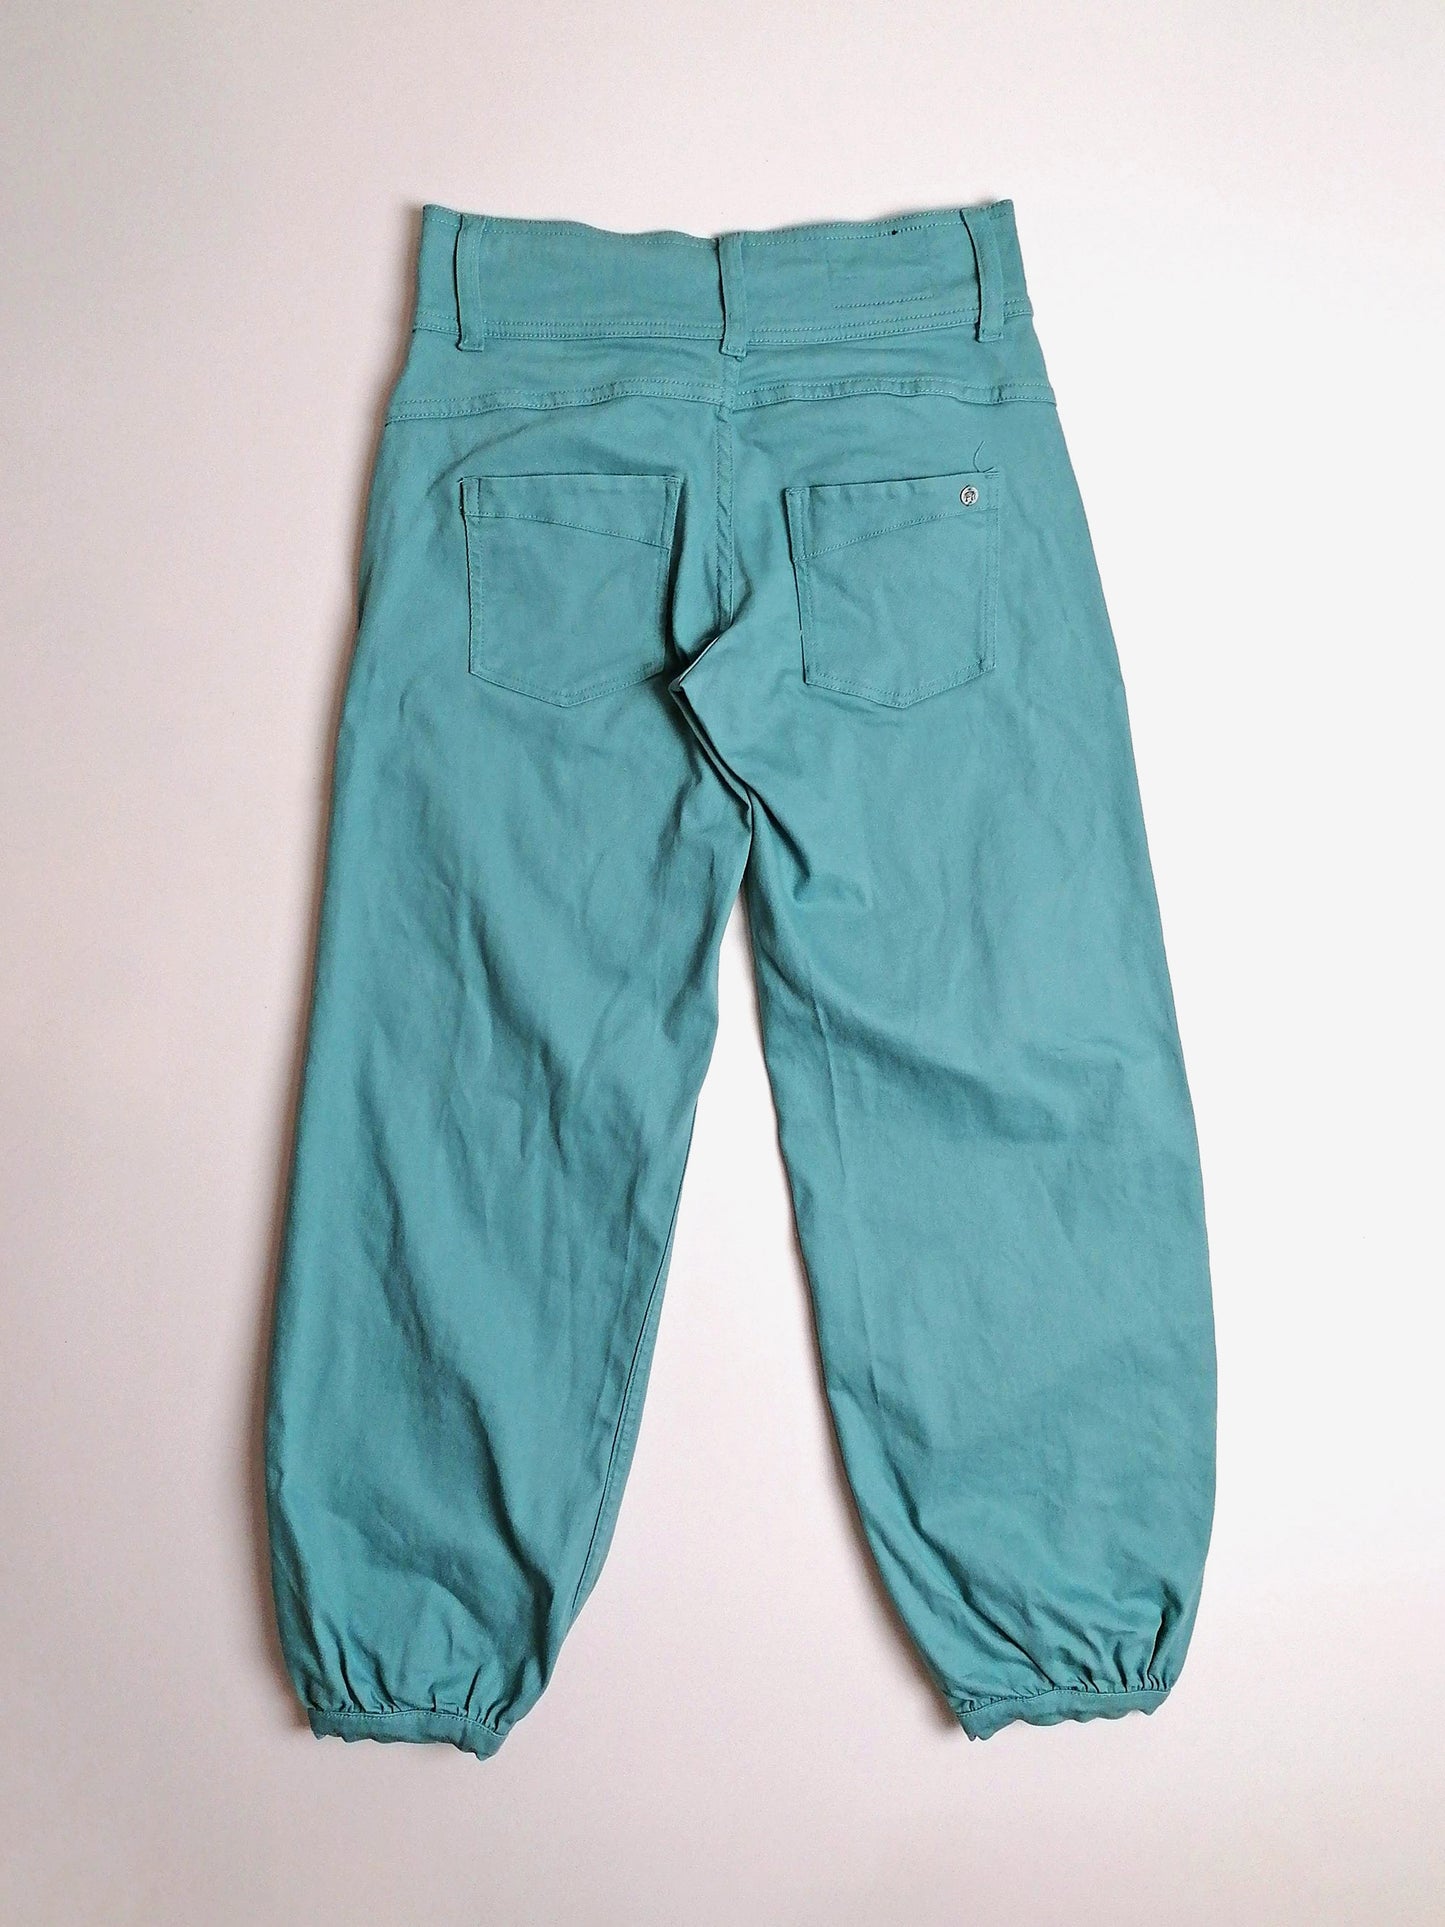 TRANQUILLO Organic Cotton Bubble Jeans - size S / 36